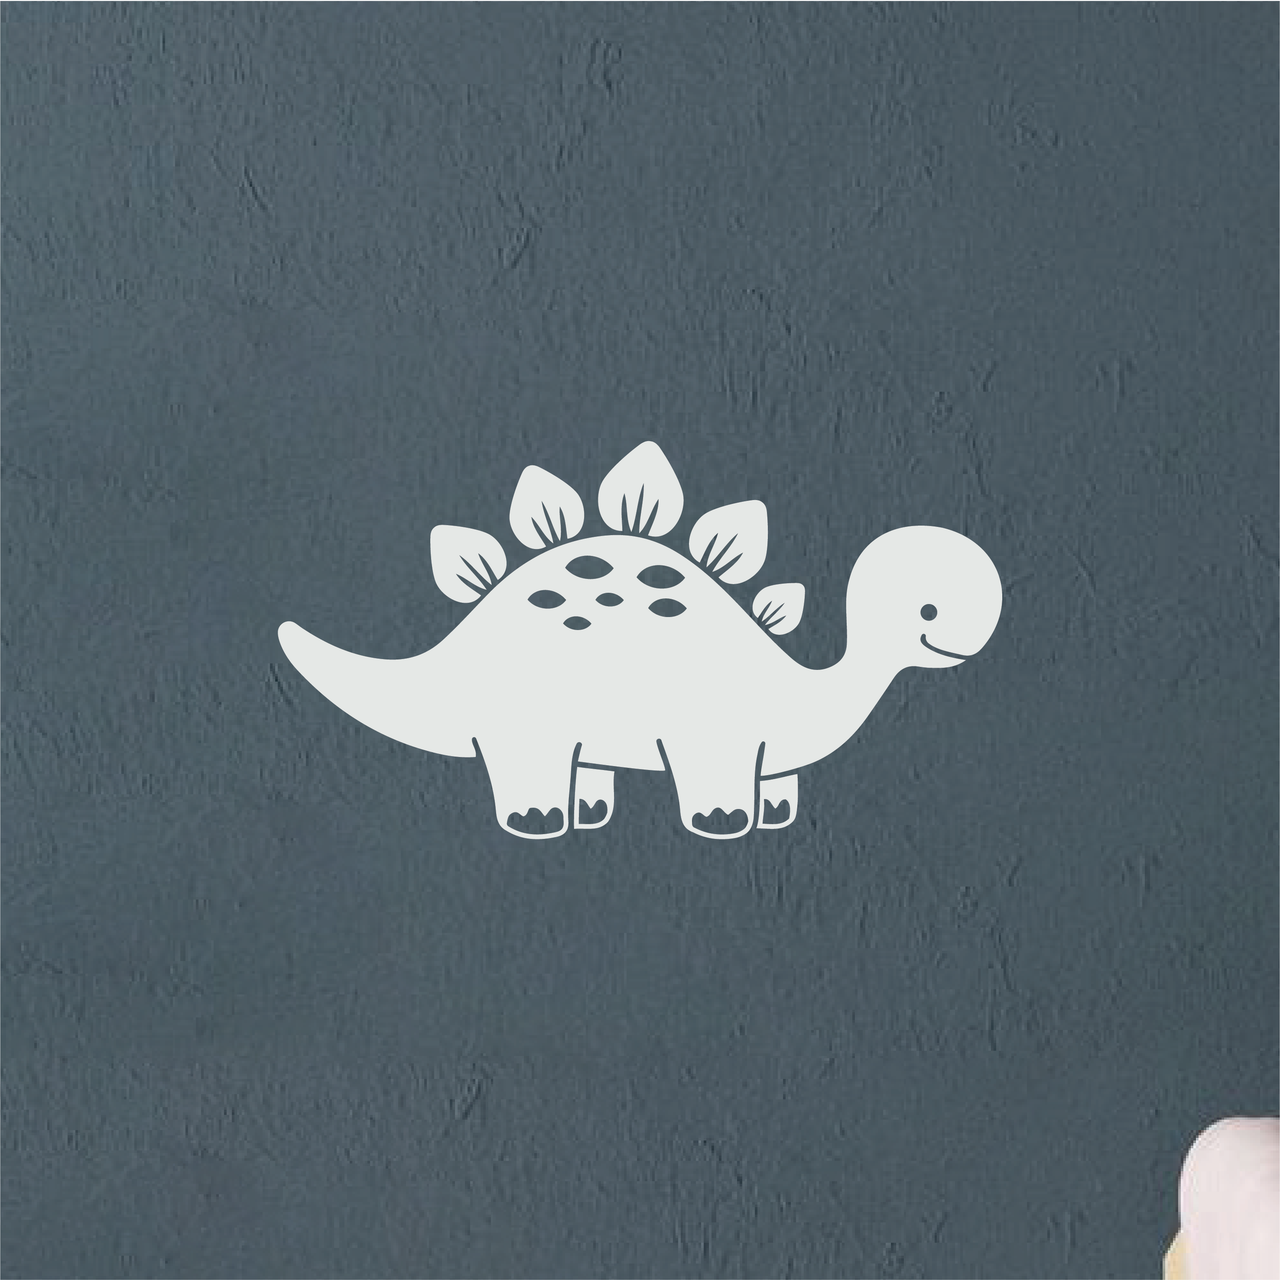 Stegosaurus Dinosaur Wall Decal